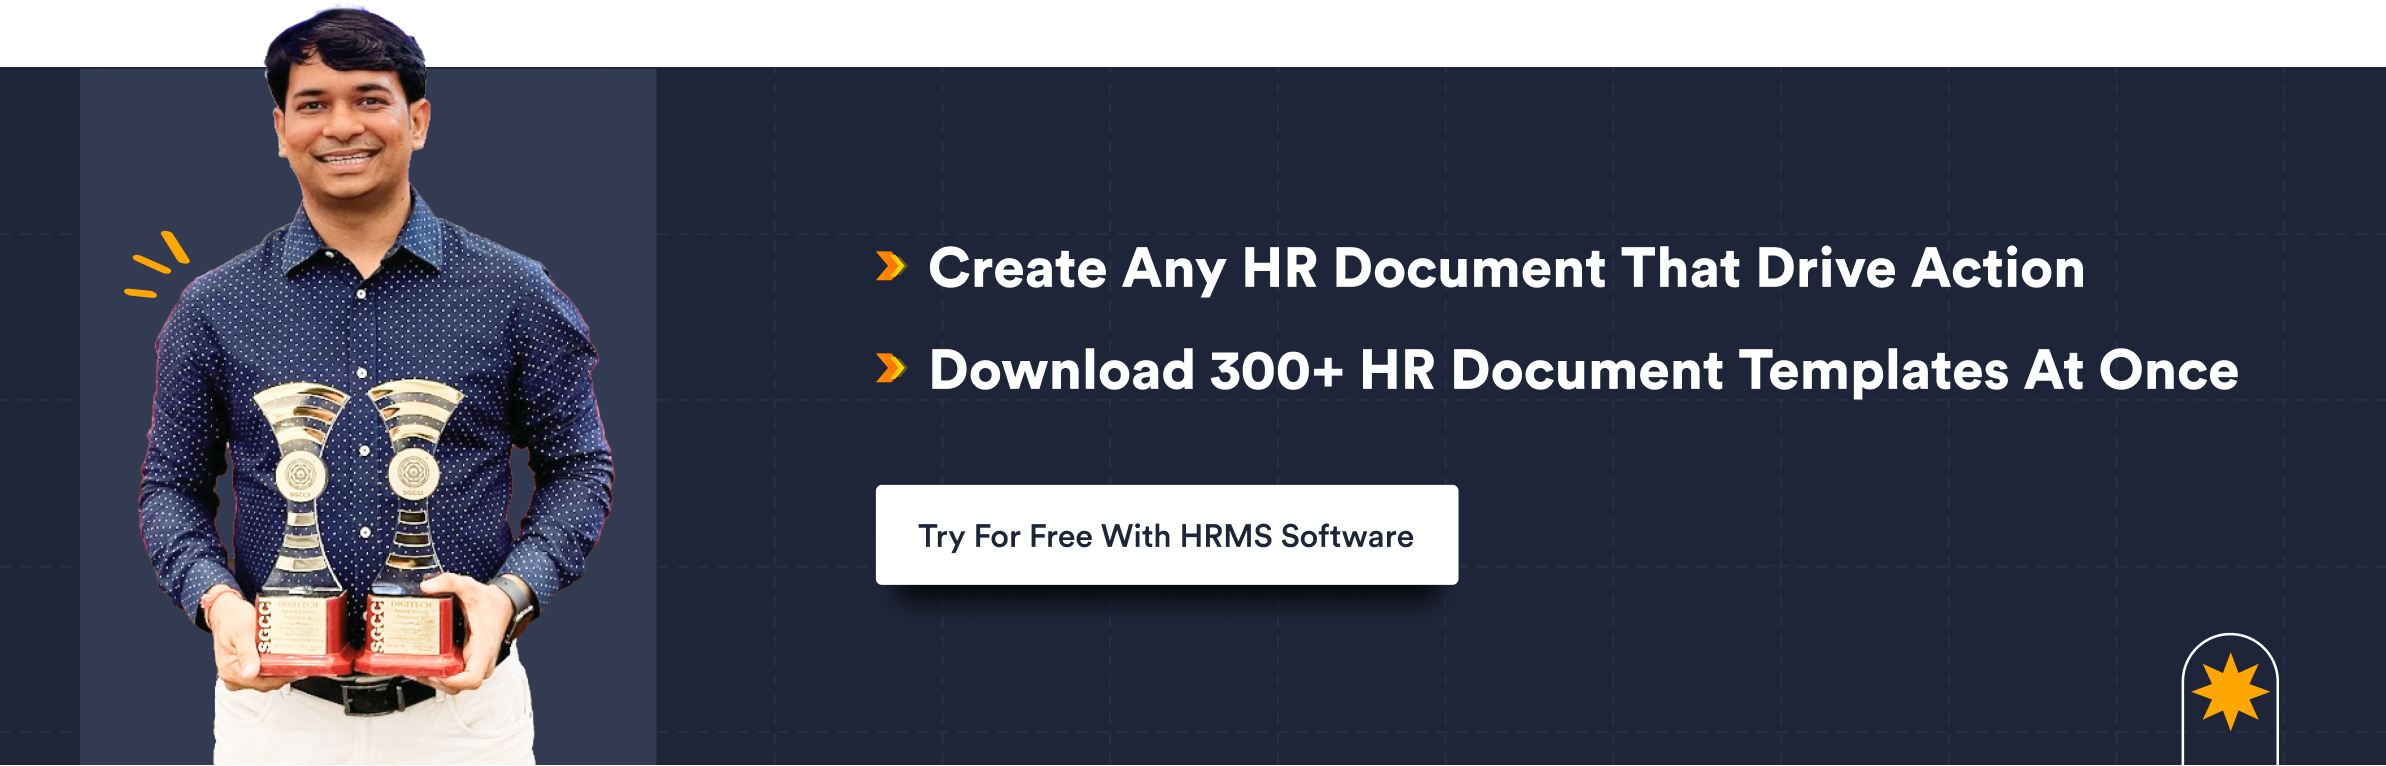 Create Any HR Document